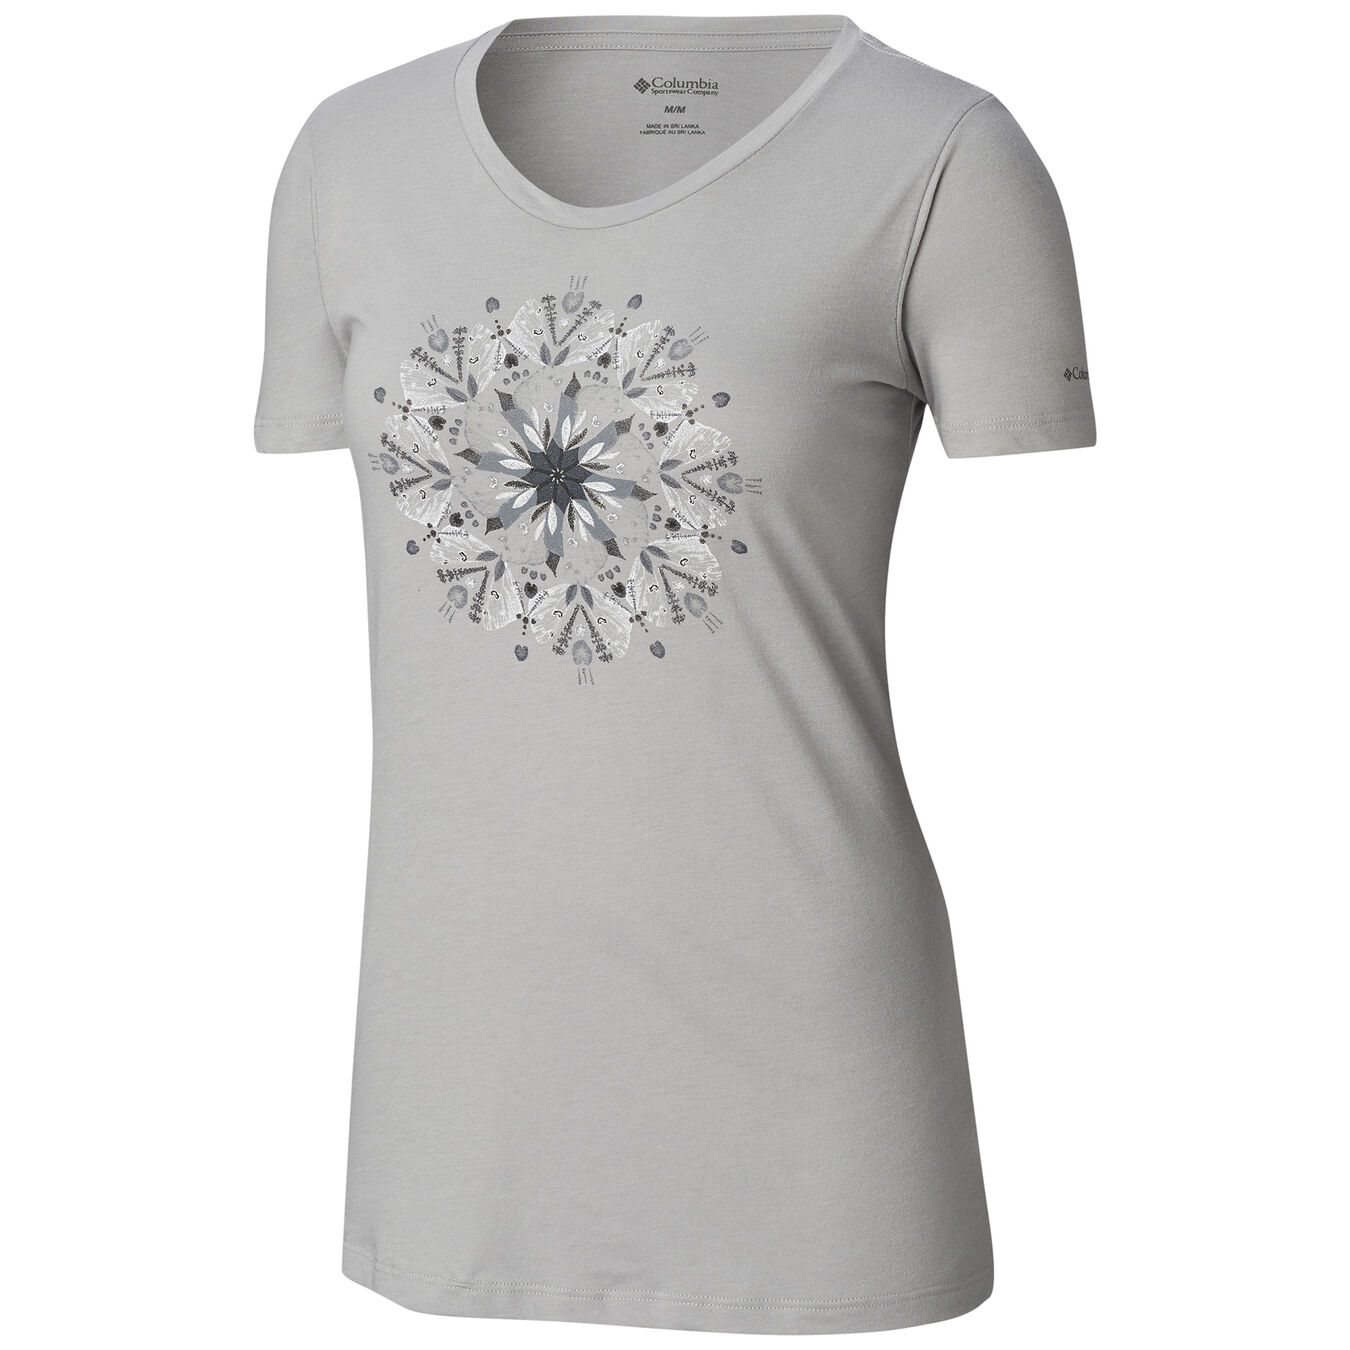 Details about  / Columbia Sportswear Women/'s T-Shirt M L or XL Medallion Petals White New